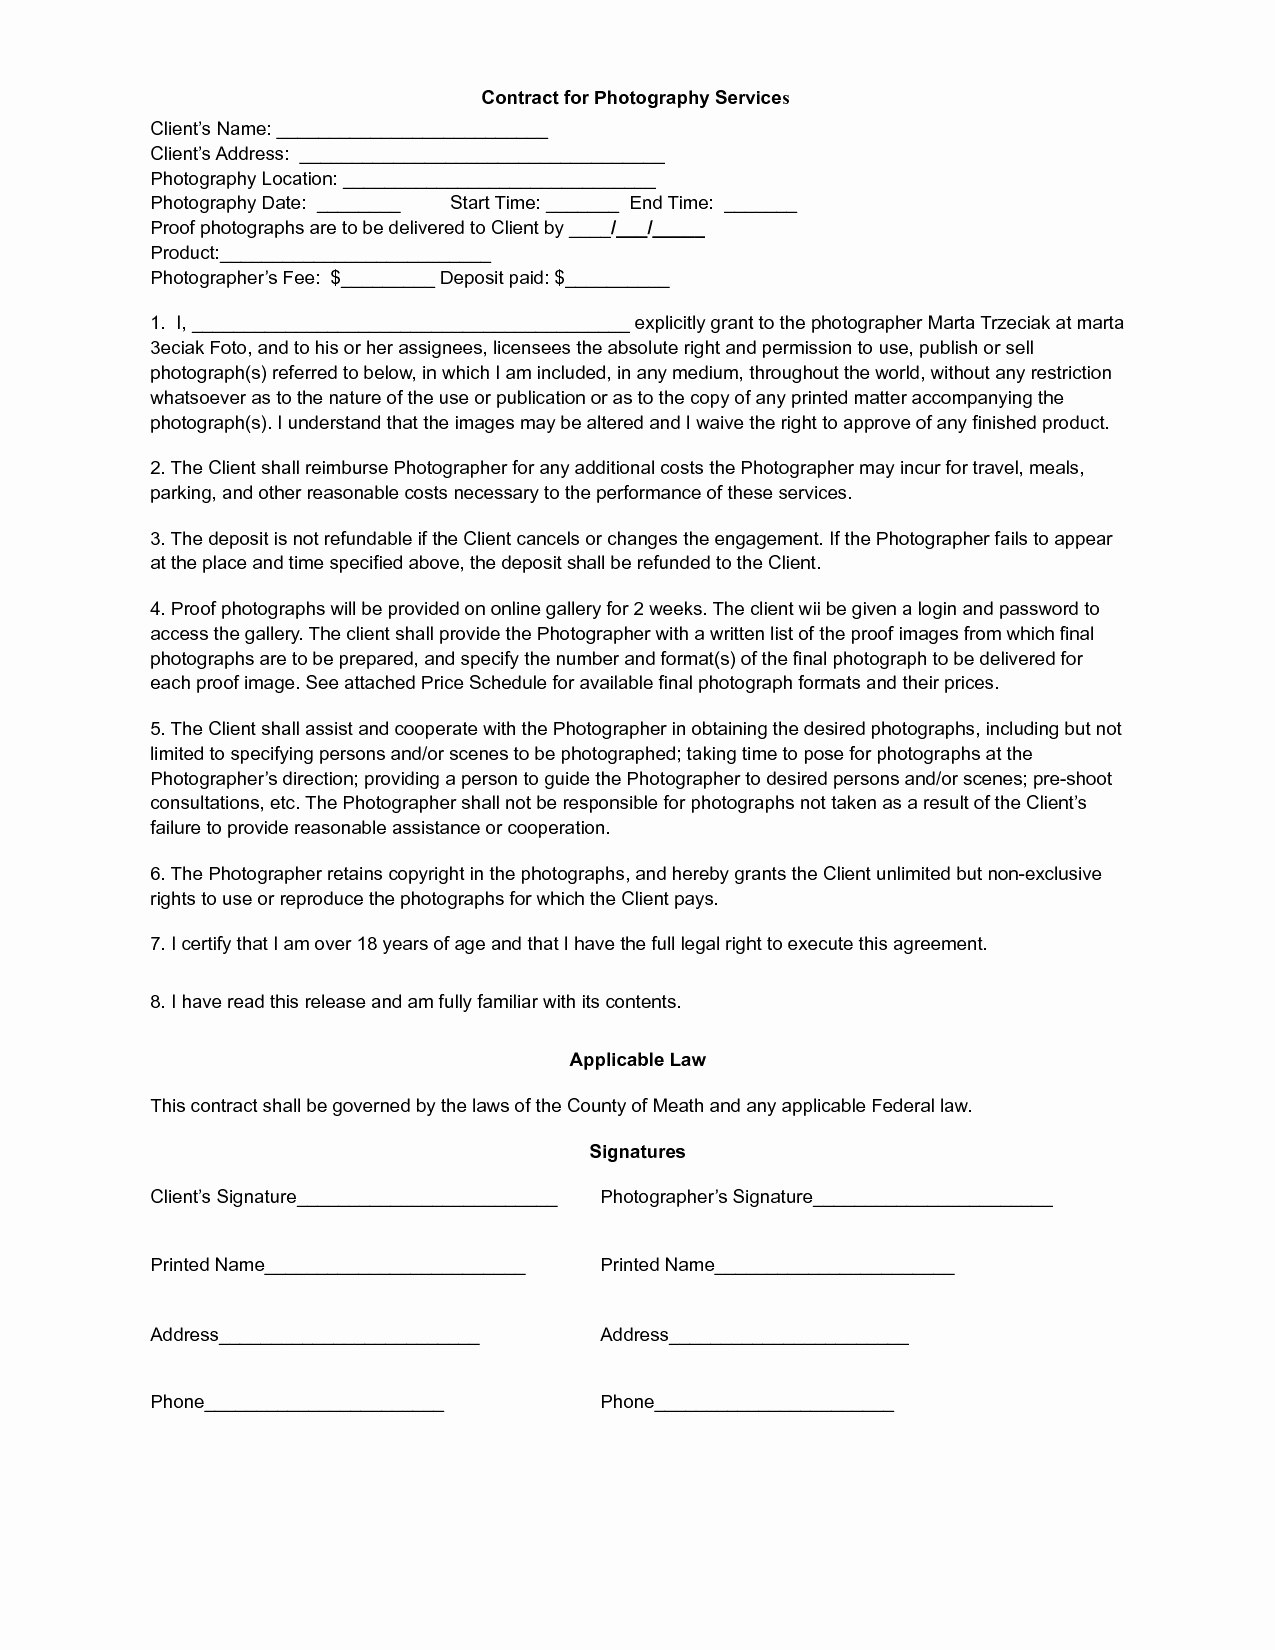 Free Hipaa Business Associate Agreement Form – Guiaubuntupt pertaining to Free Hipaa Business Associate Agreement Template 2018